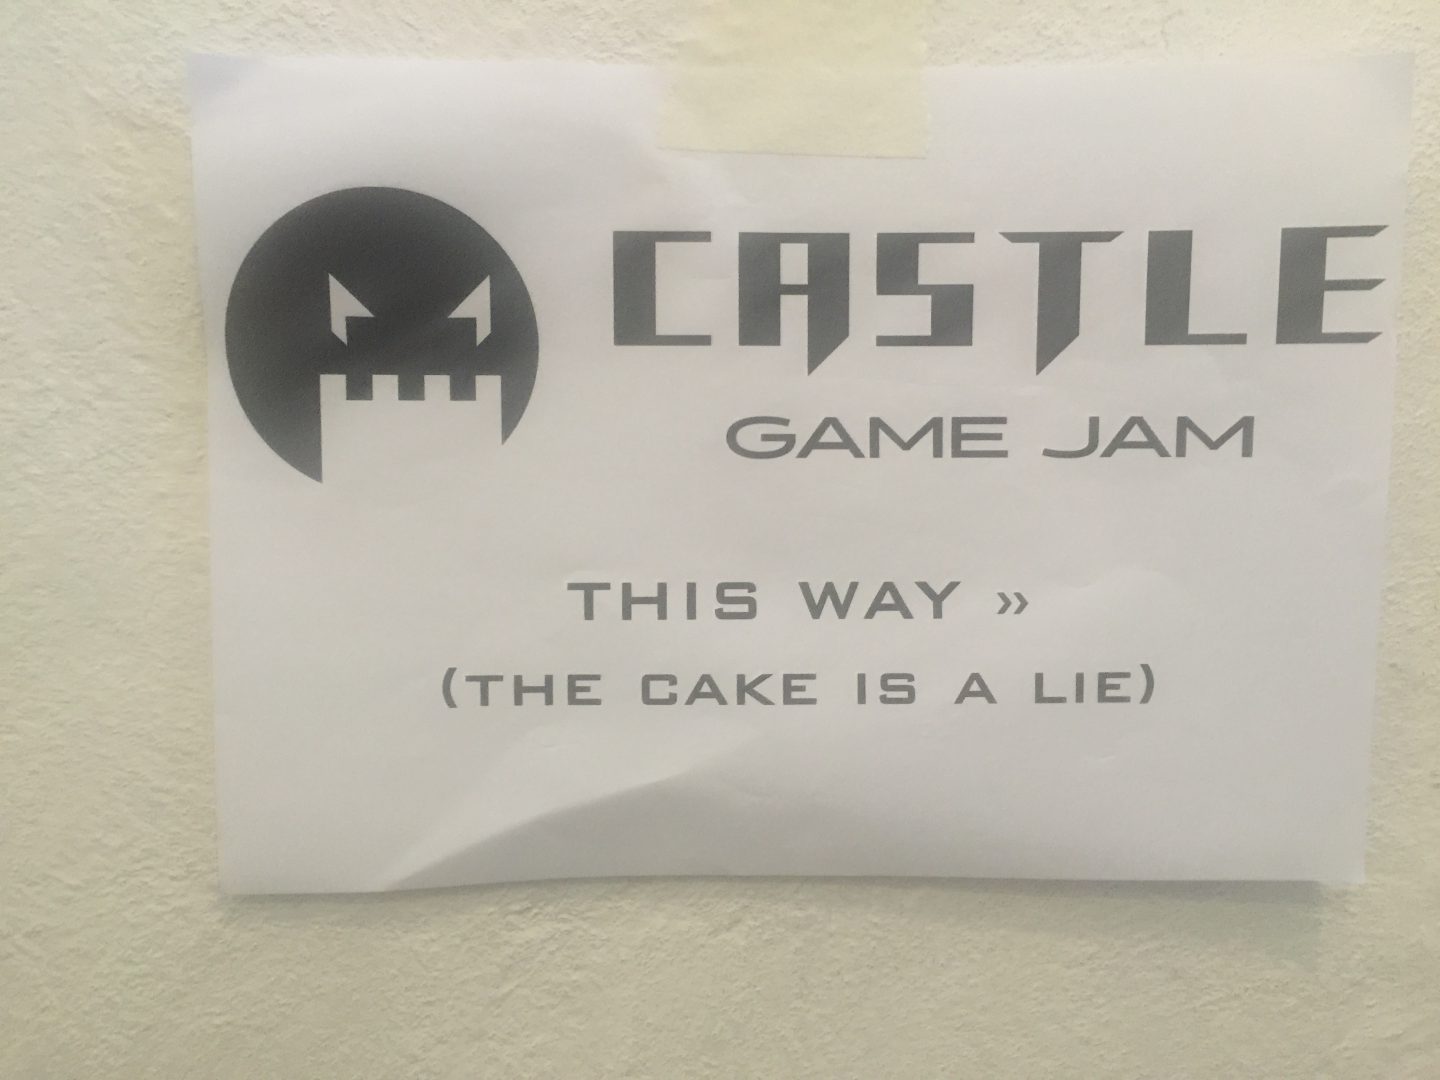 Castle Game Jam